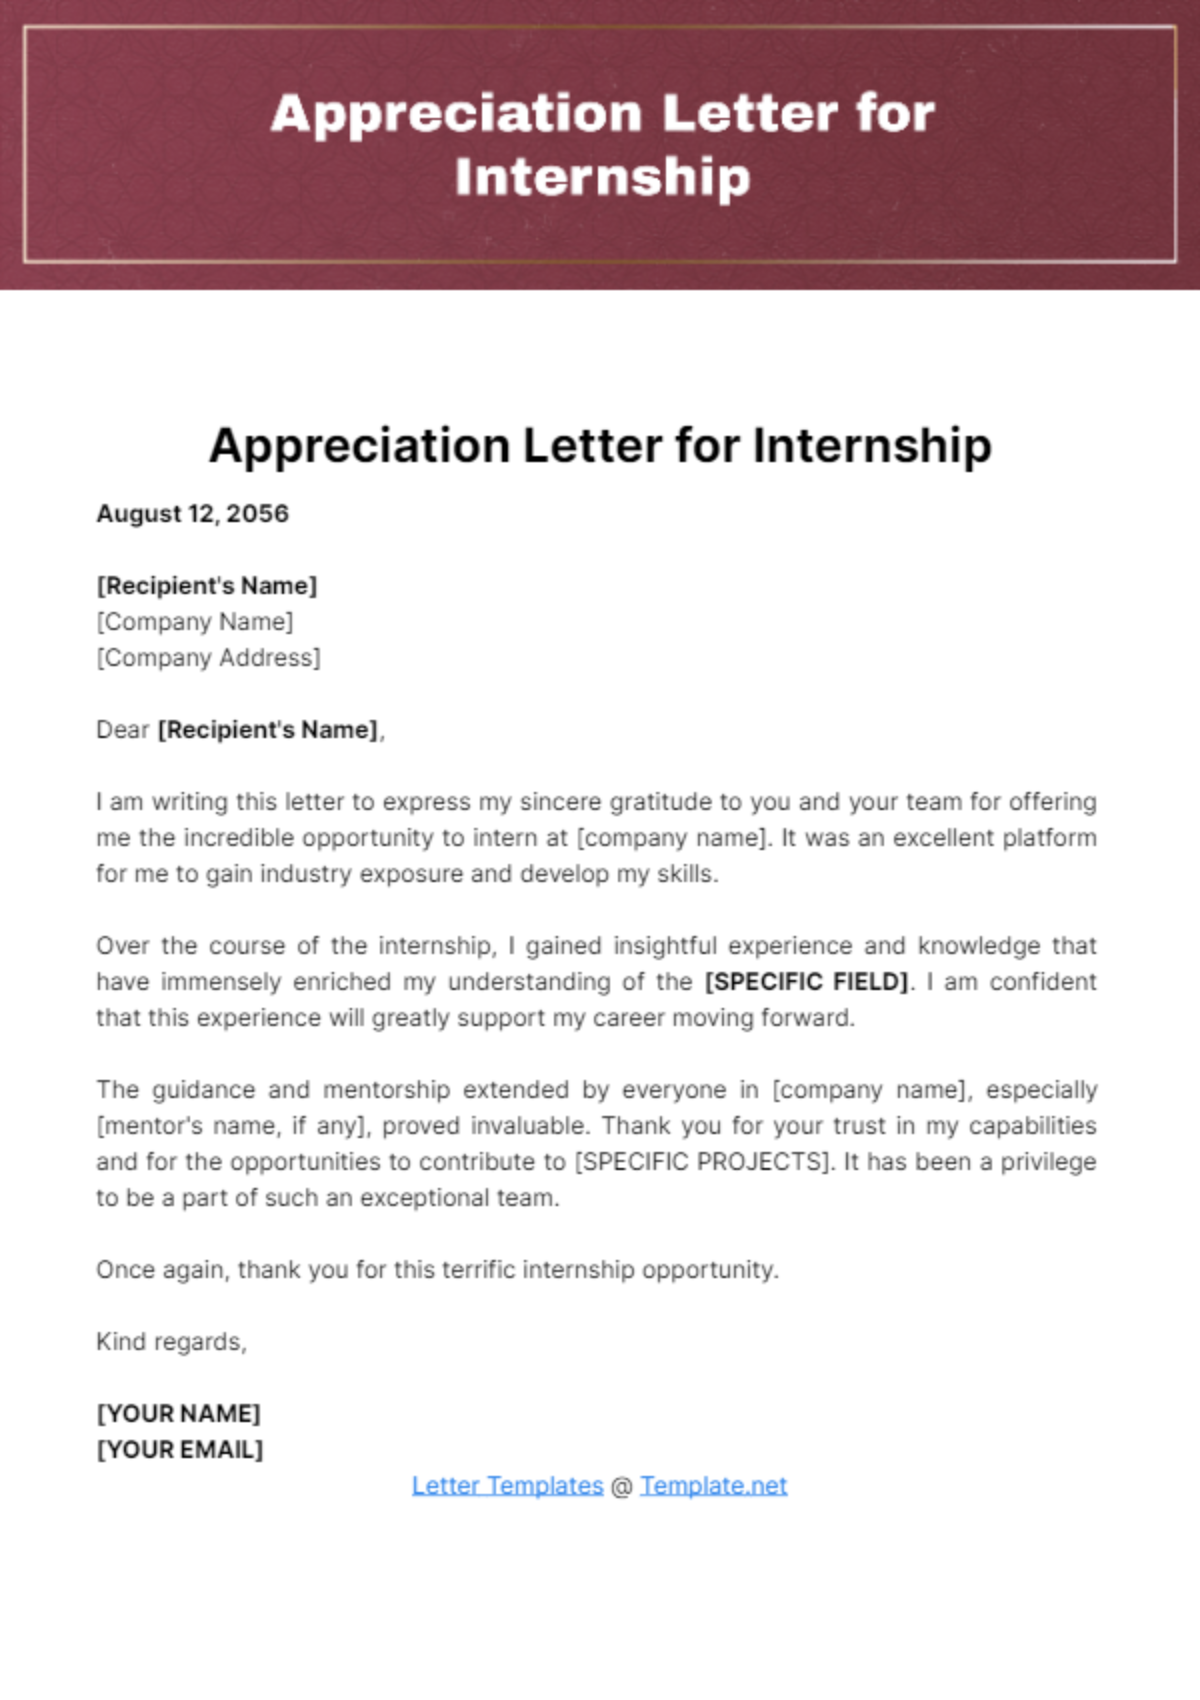 Appreciation Letter for Internship Template